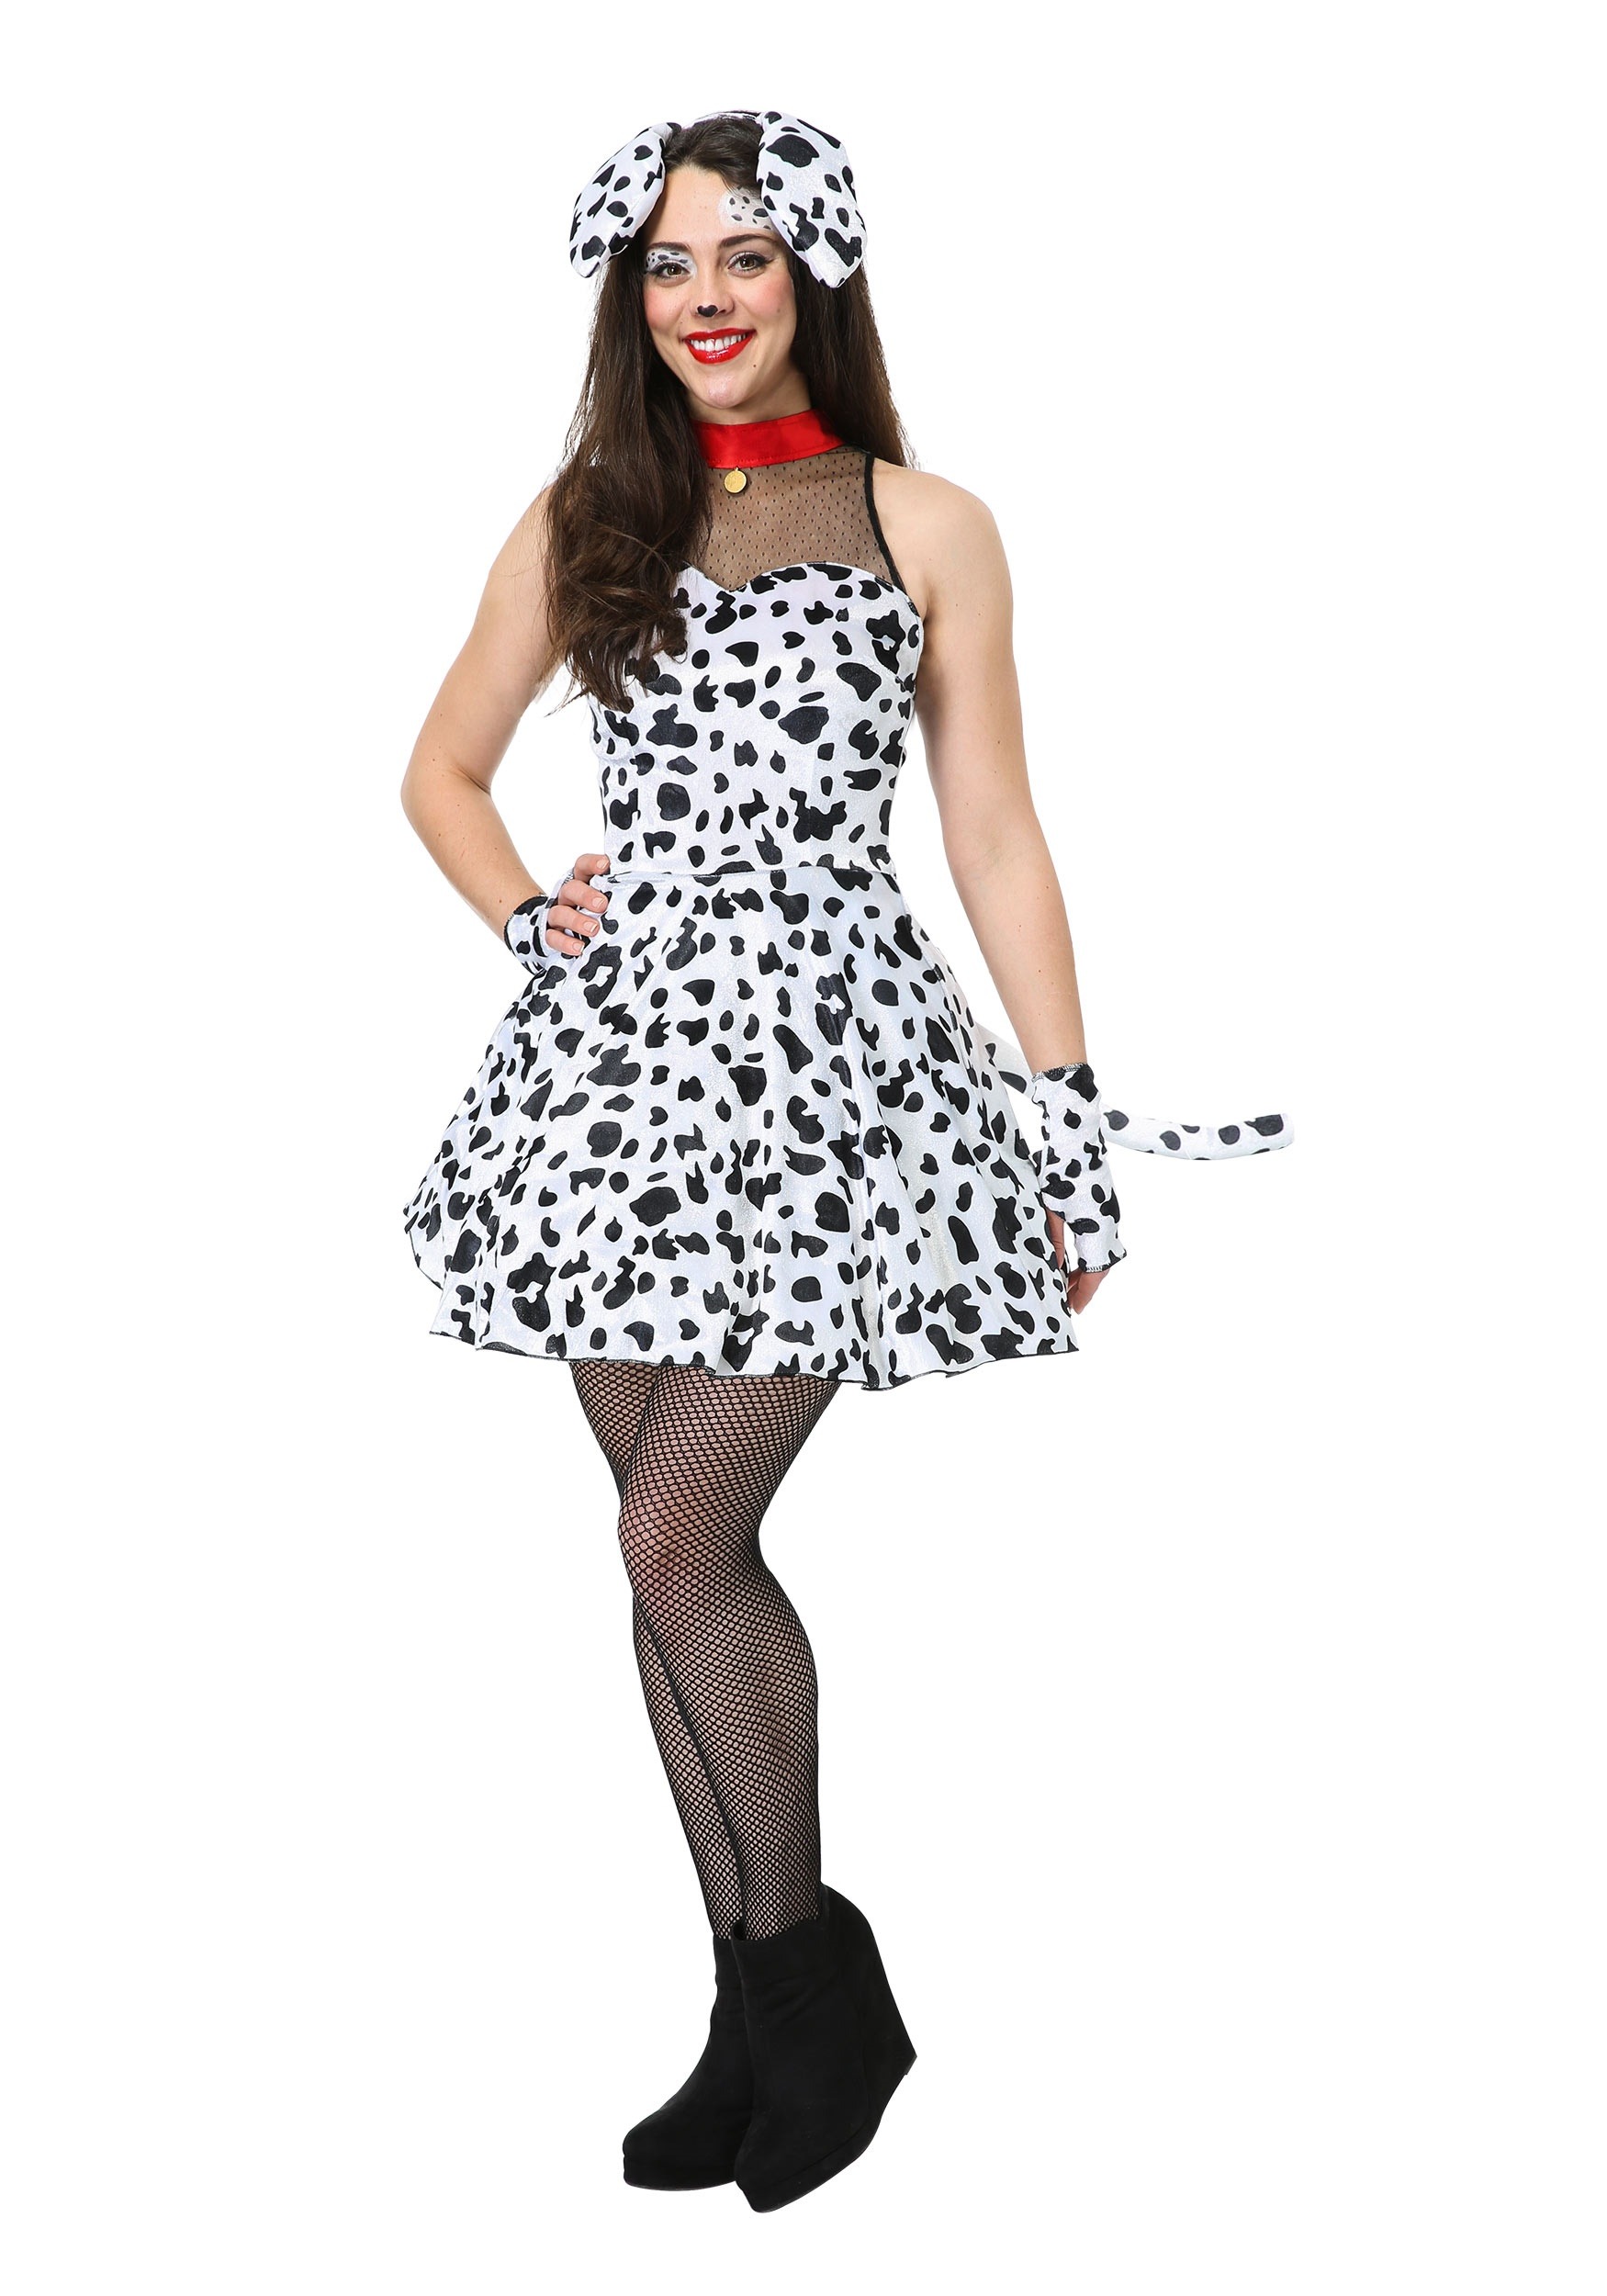 Photos - Fancy Dress FUN Costumes Flirty Women's Dalmatian Costume Dress Black/Red/Whit